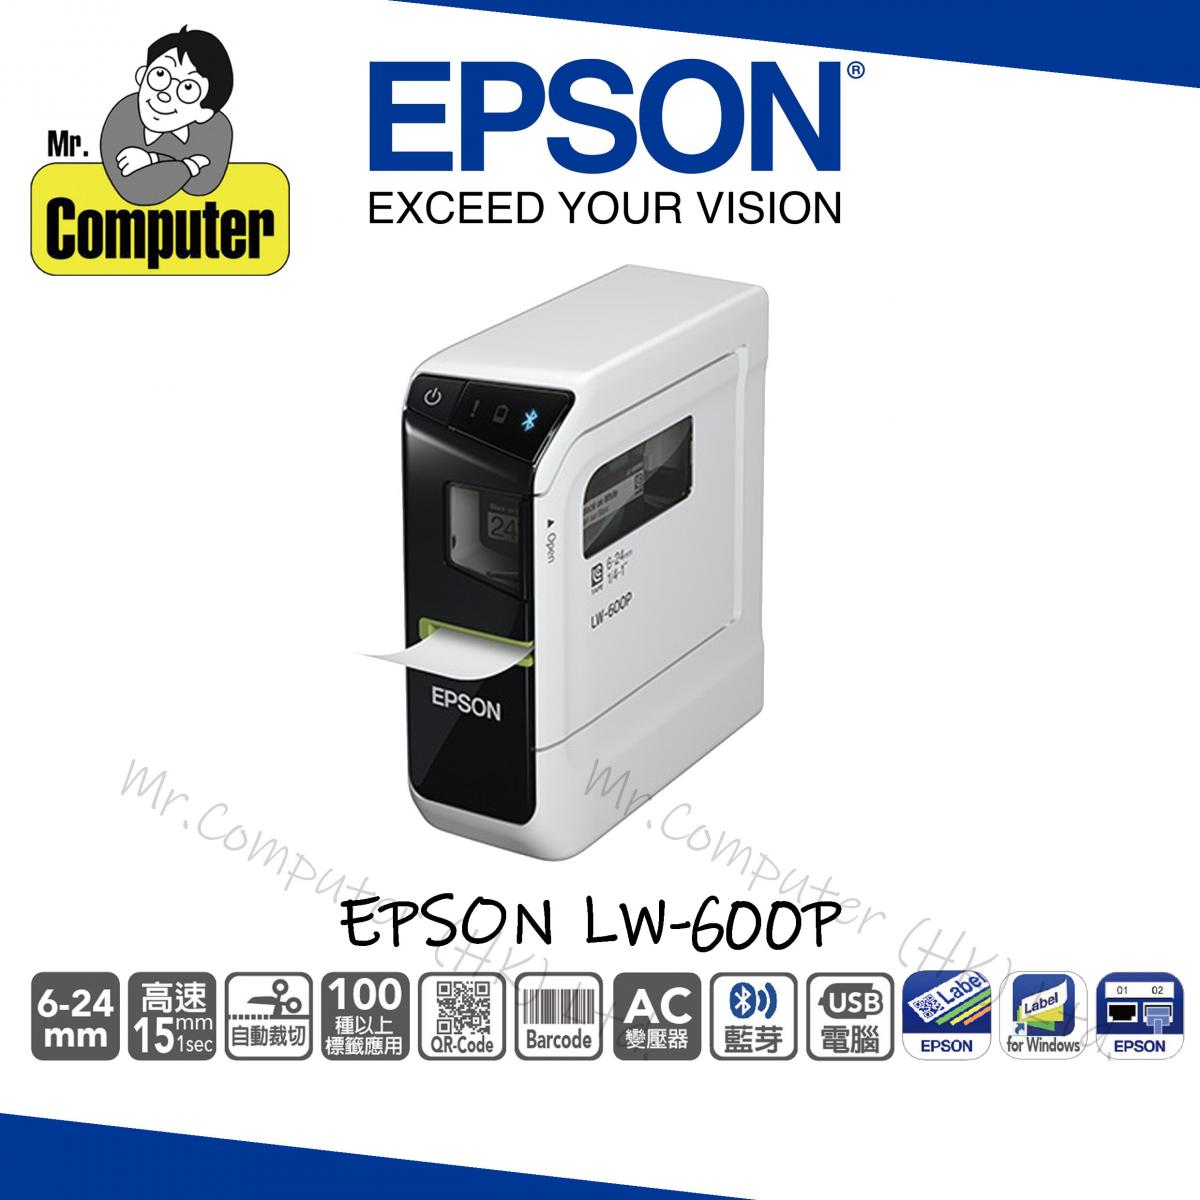 (送Epson 標籤帶一盒) LW-600p Label Printer #C610 #600p #lw600p #d460bthk #d610bthk